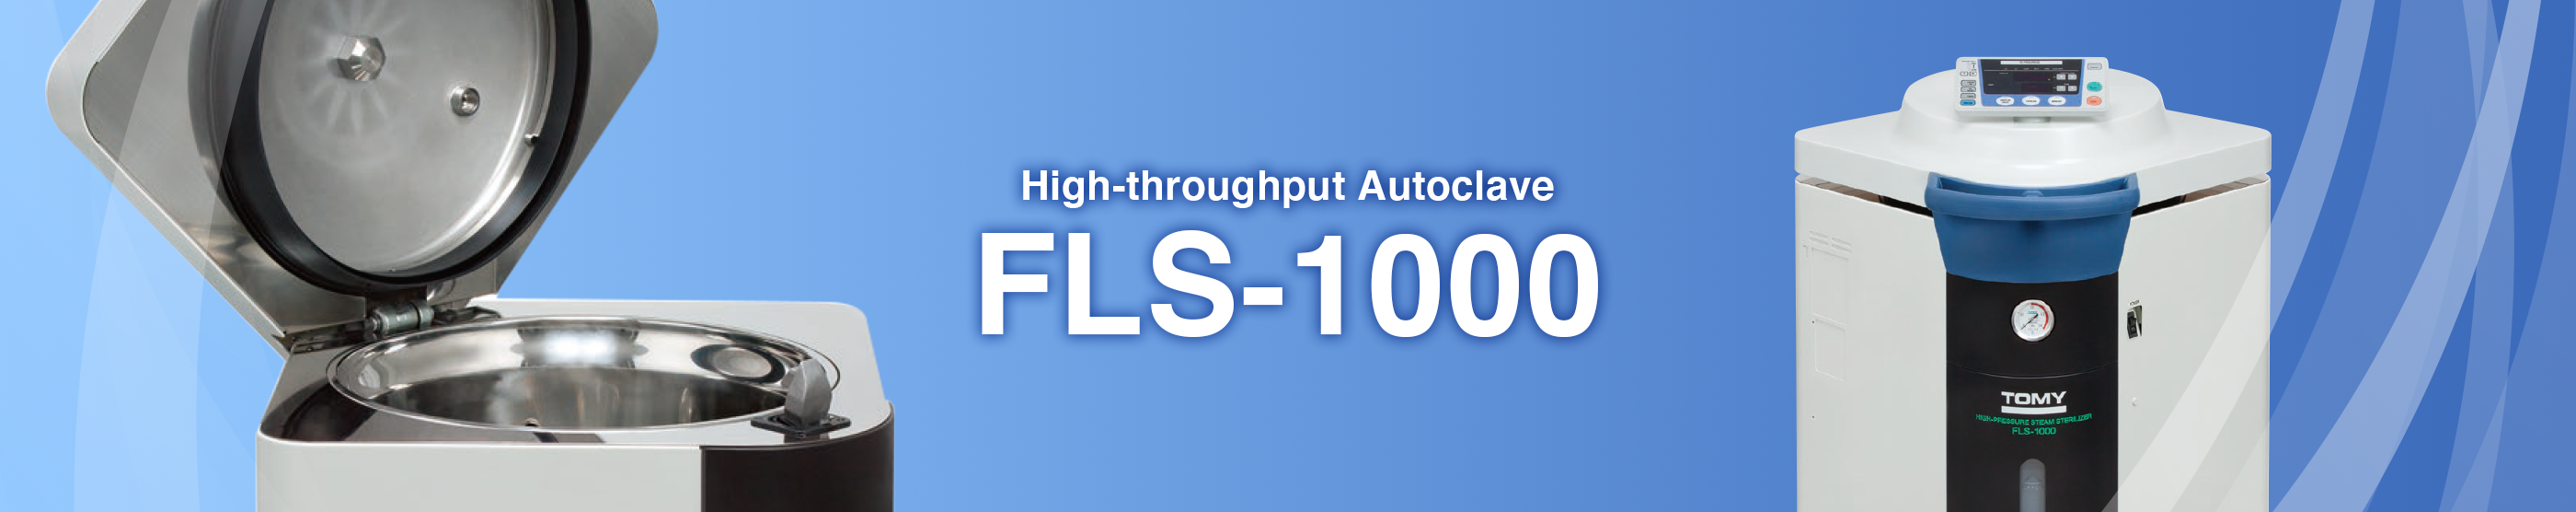 High-throughput Autoclave FLS-1000